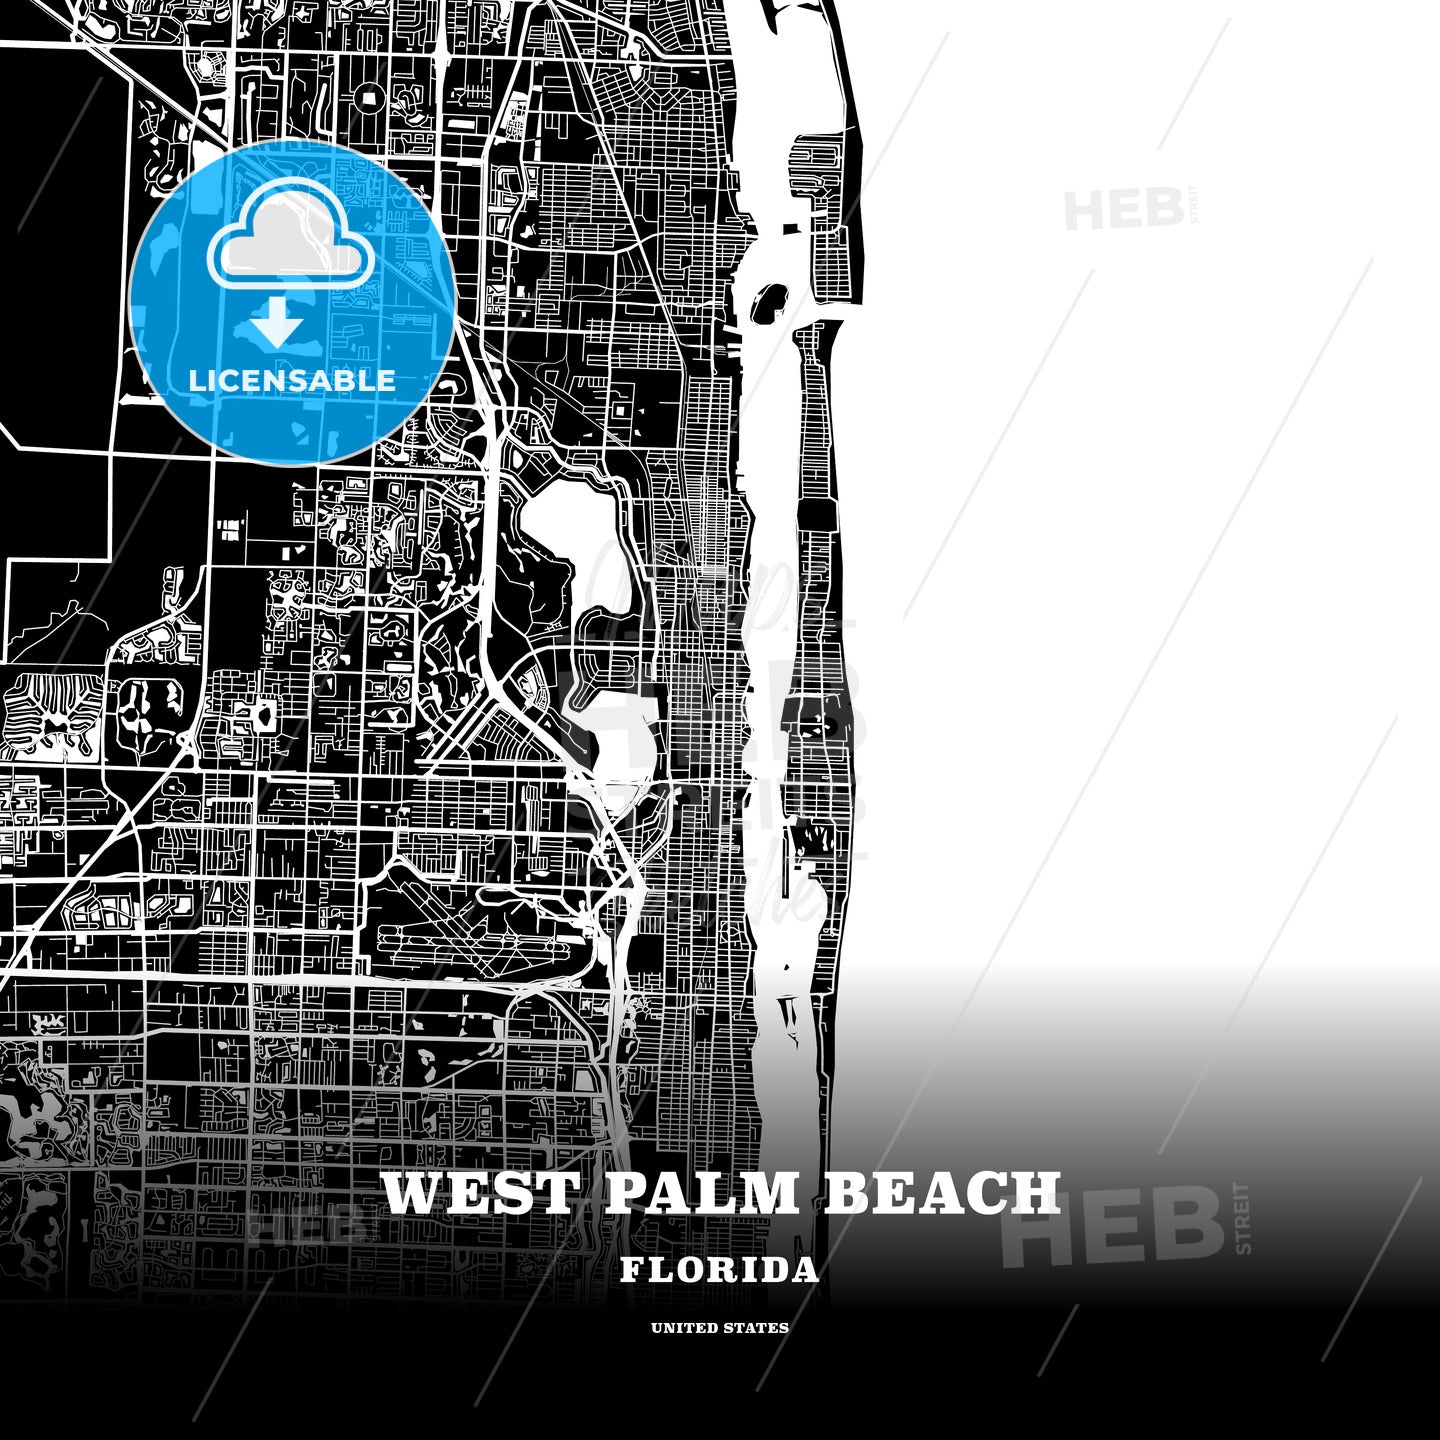 West Palm Beach, Florida, USA map